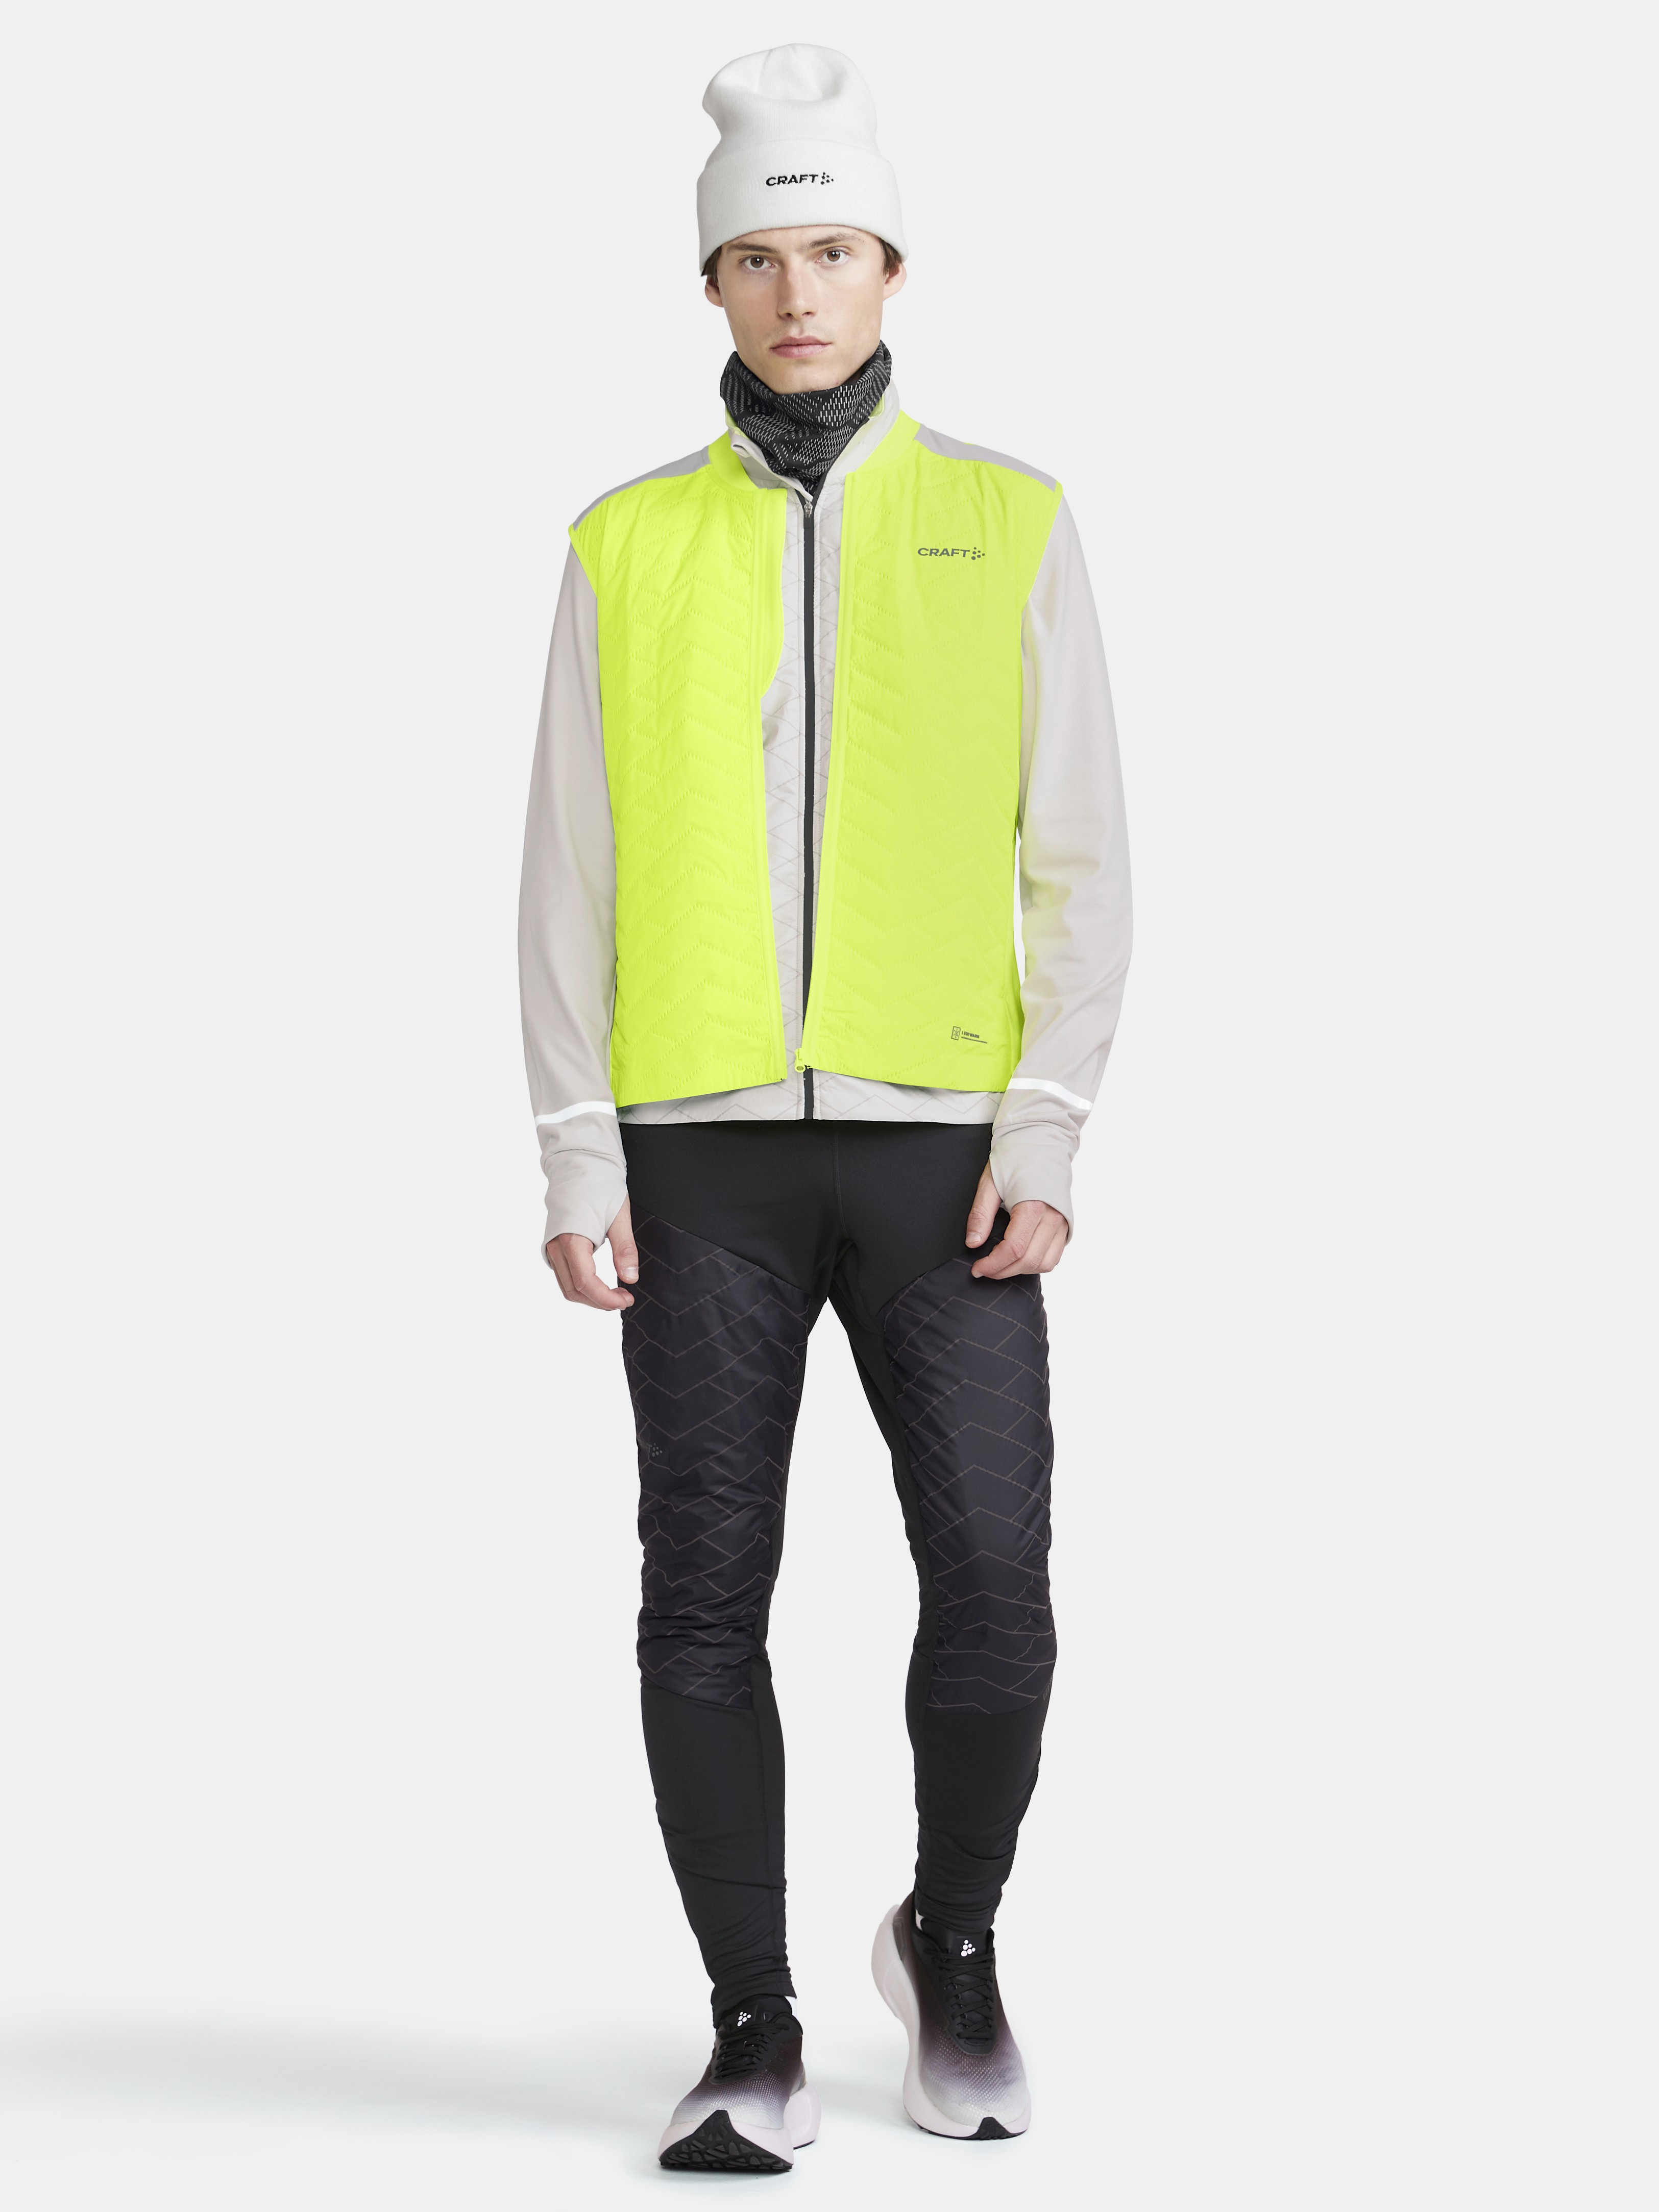 ADV SubZ Lumen Jacket 3 M - Grey | Craft Sportswear